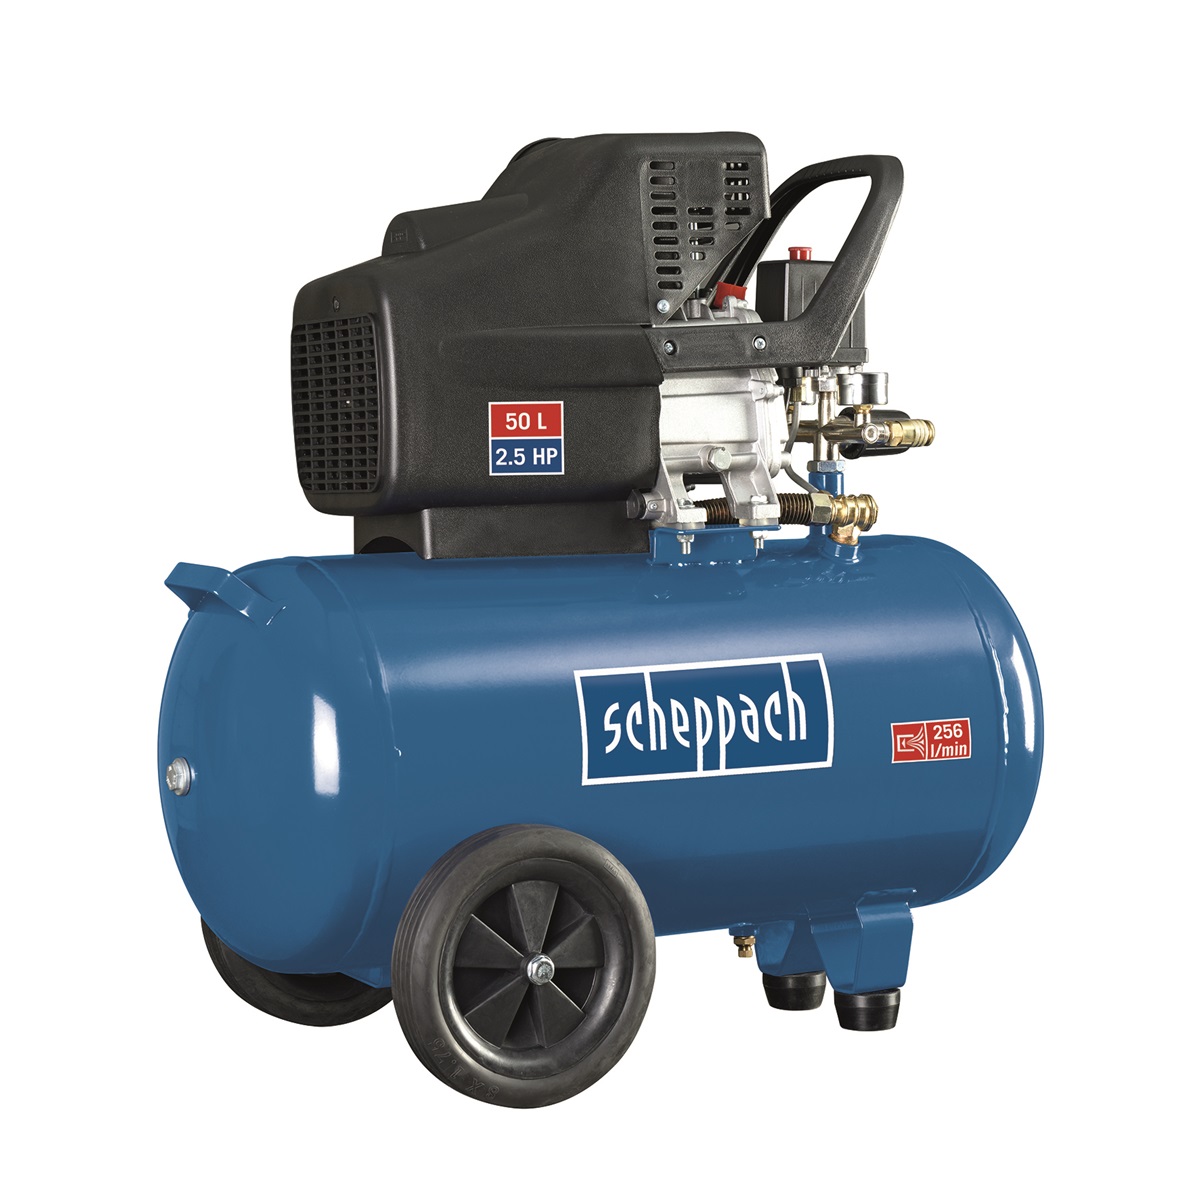 Scheppach HC 51 - olejový kompresor 50 l